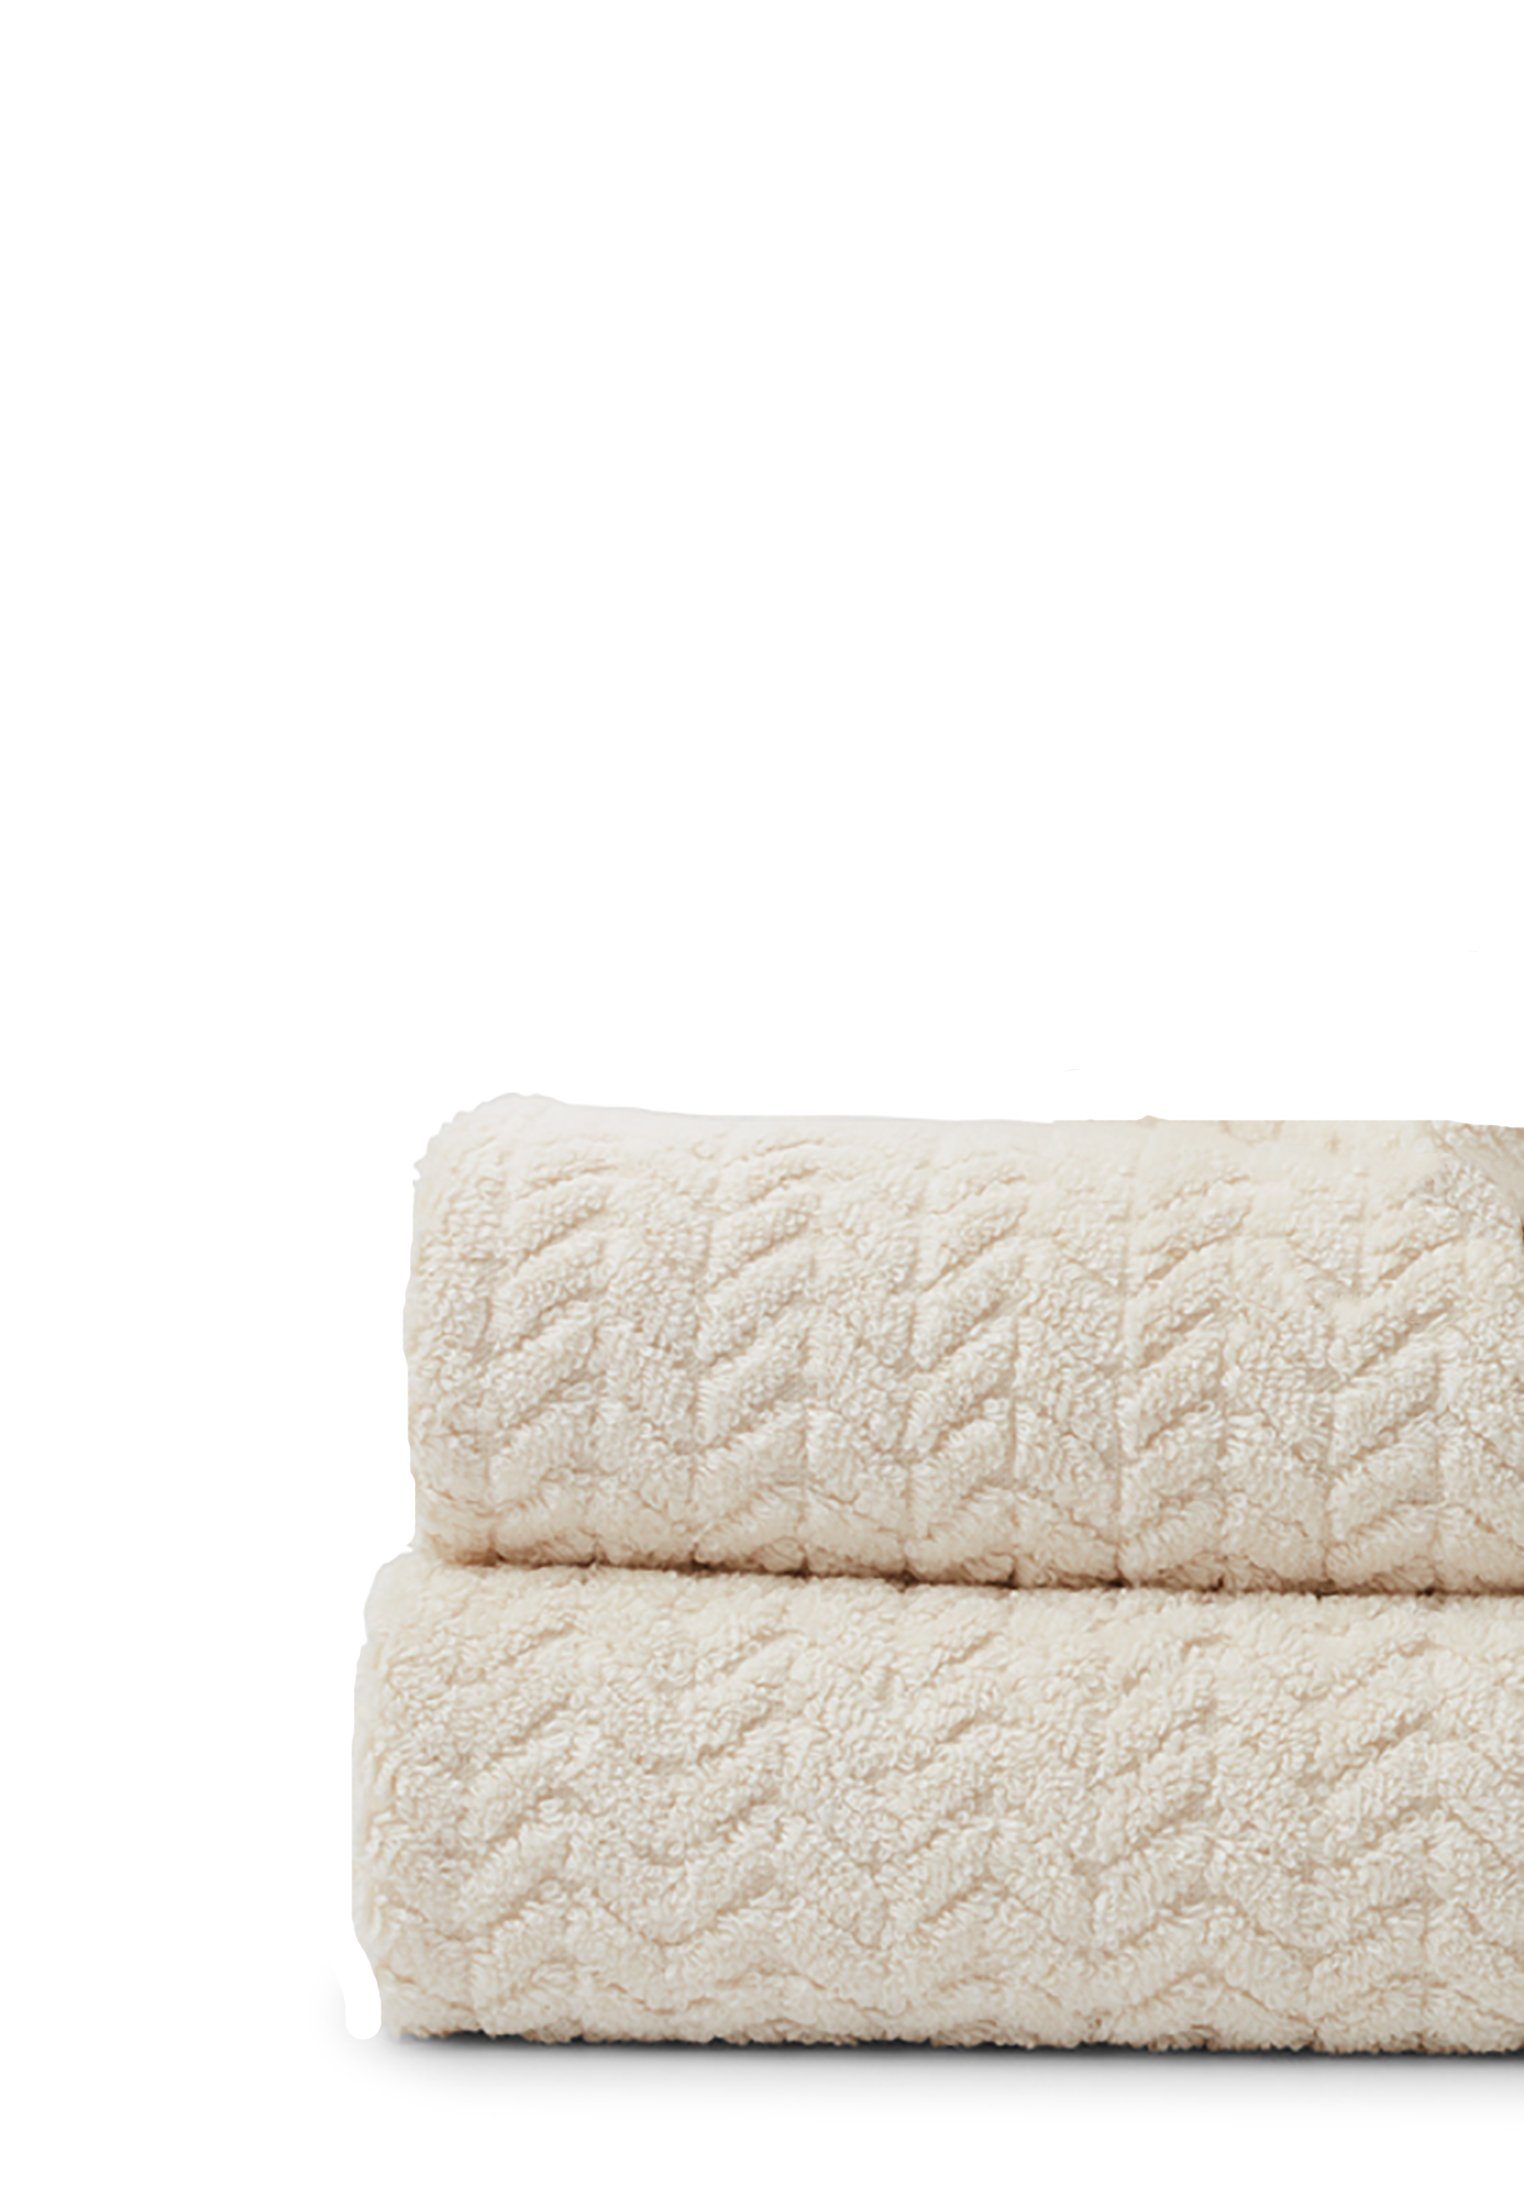 Terry ecru Structured Lexington Towel Cotton/Lyocell Handtuch